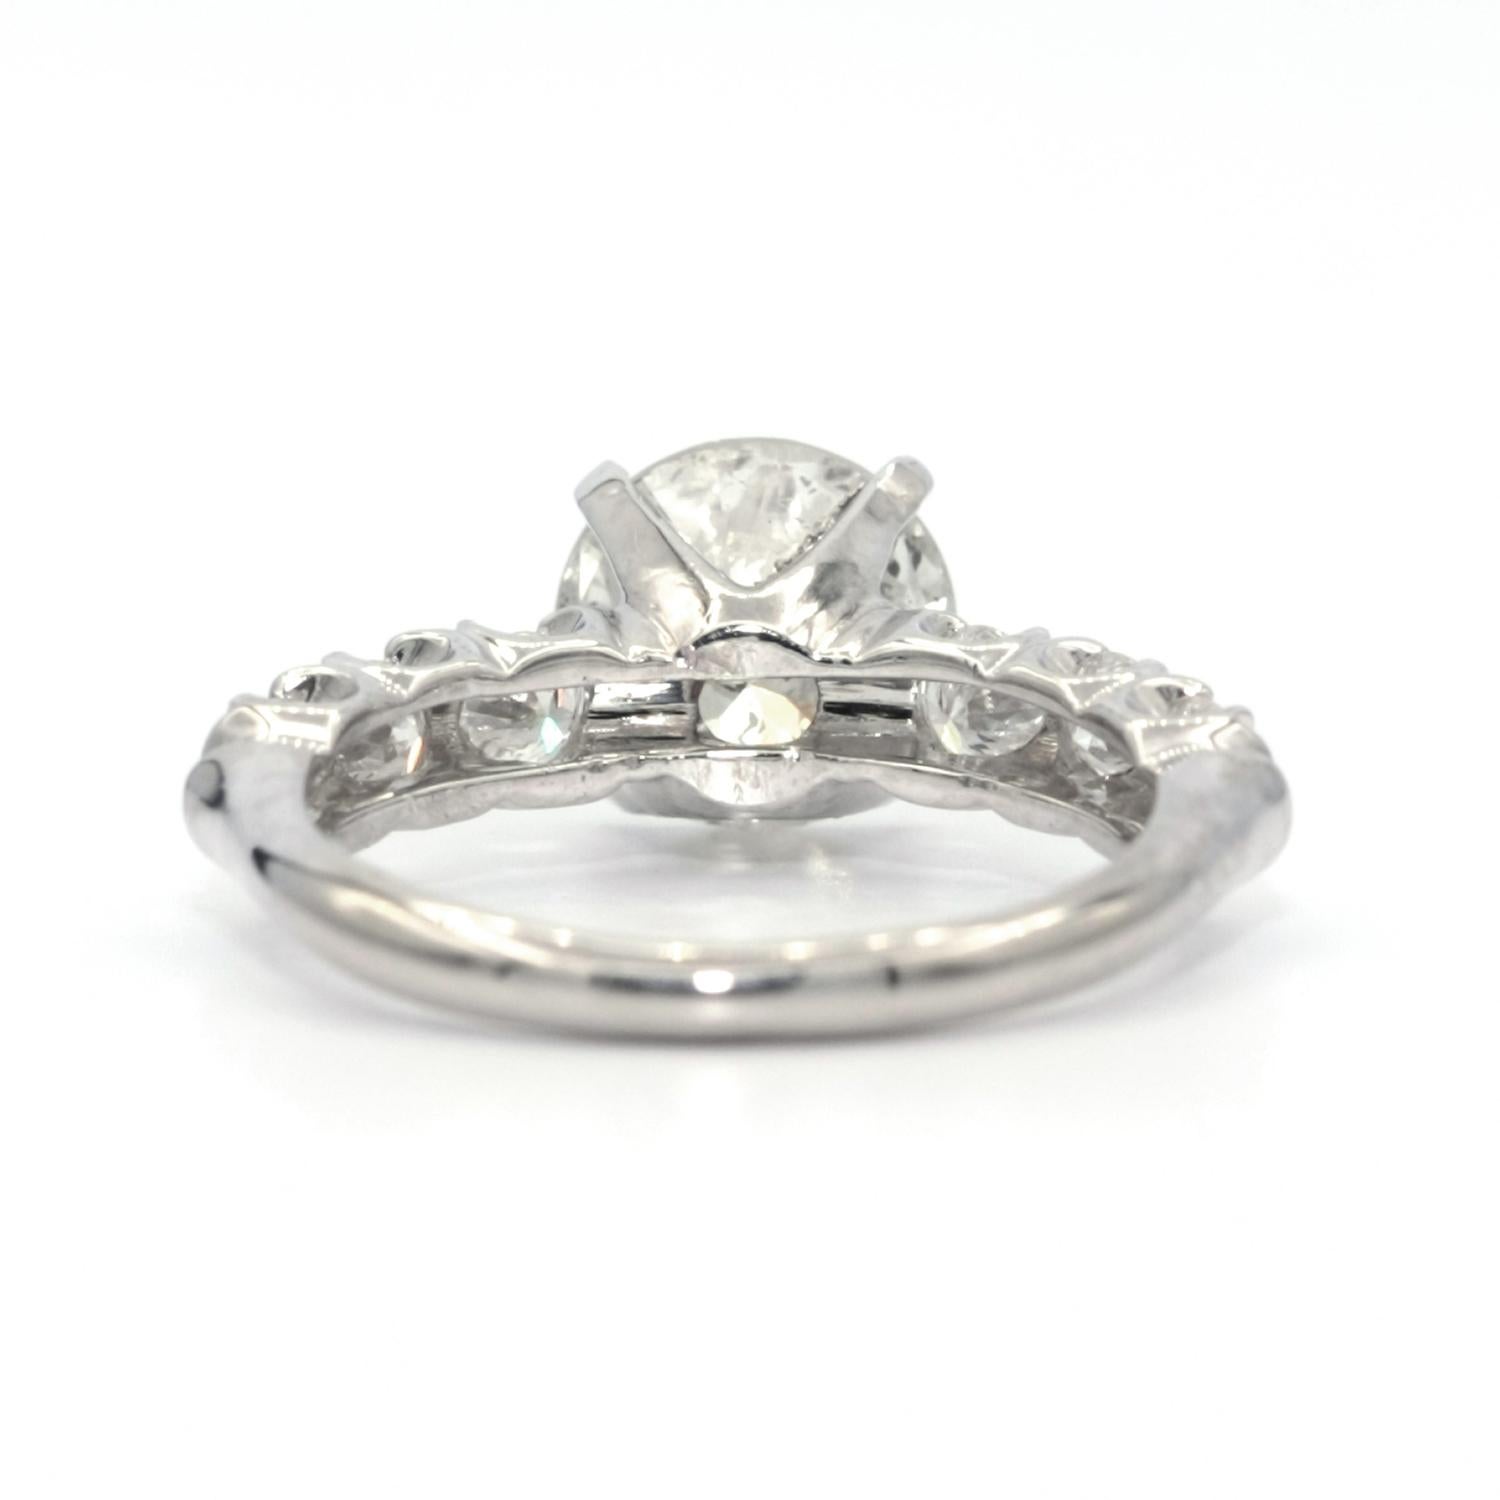 Round Cut 2.85 Carat Diamond Engagement Ring